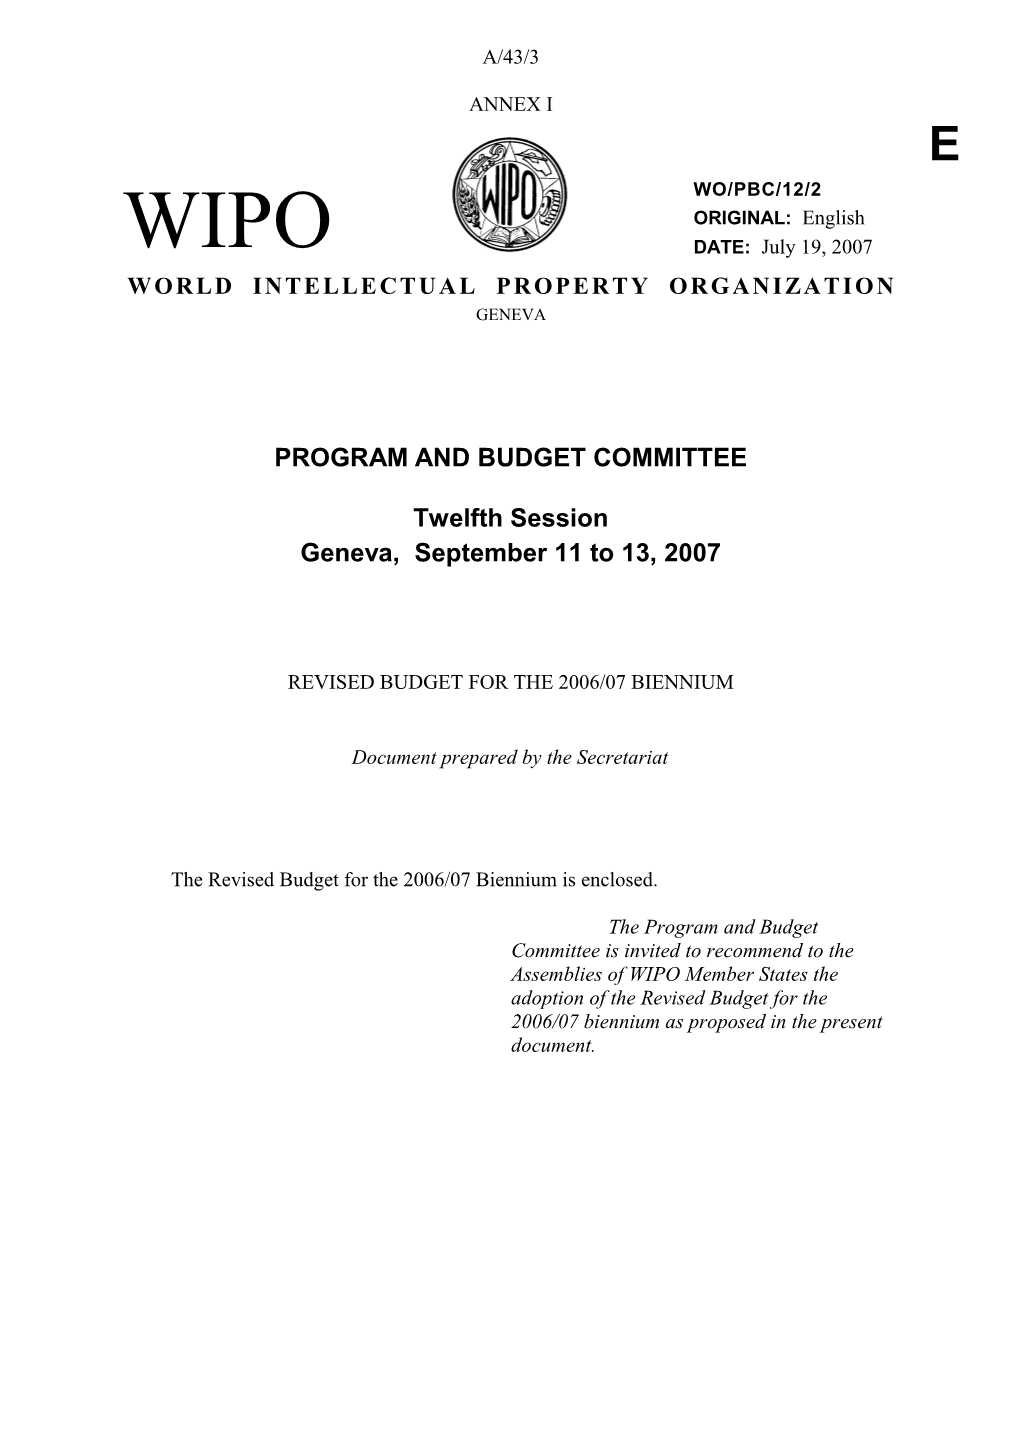 A/43/3: Revised Budget for the 2006/07 Biennium (Annex 1)